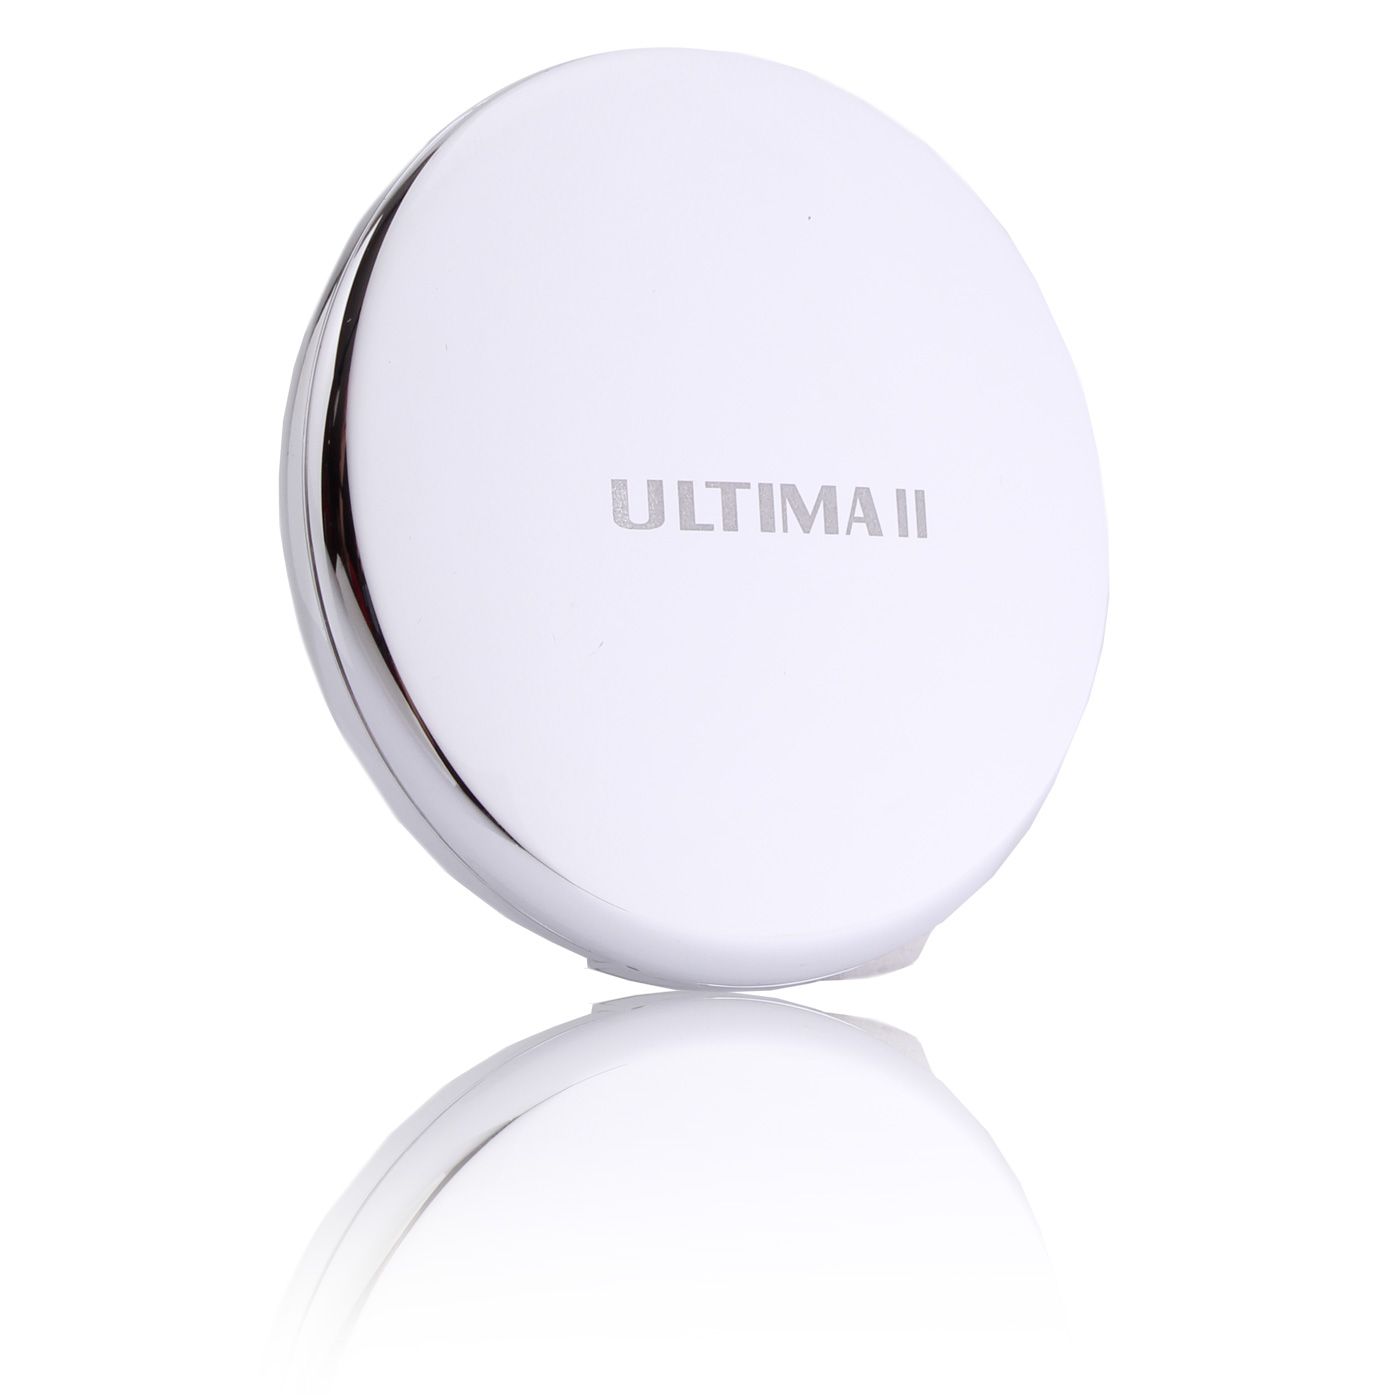 Ultima II Delicate Creme Makeup Ocher (13g) - 1